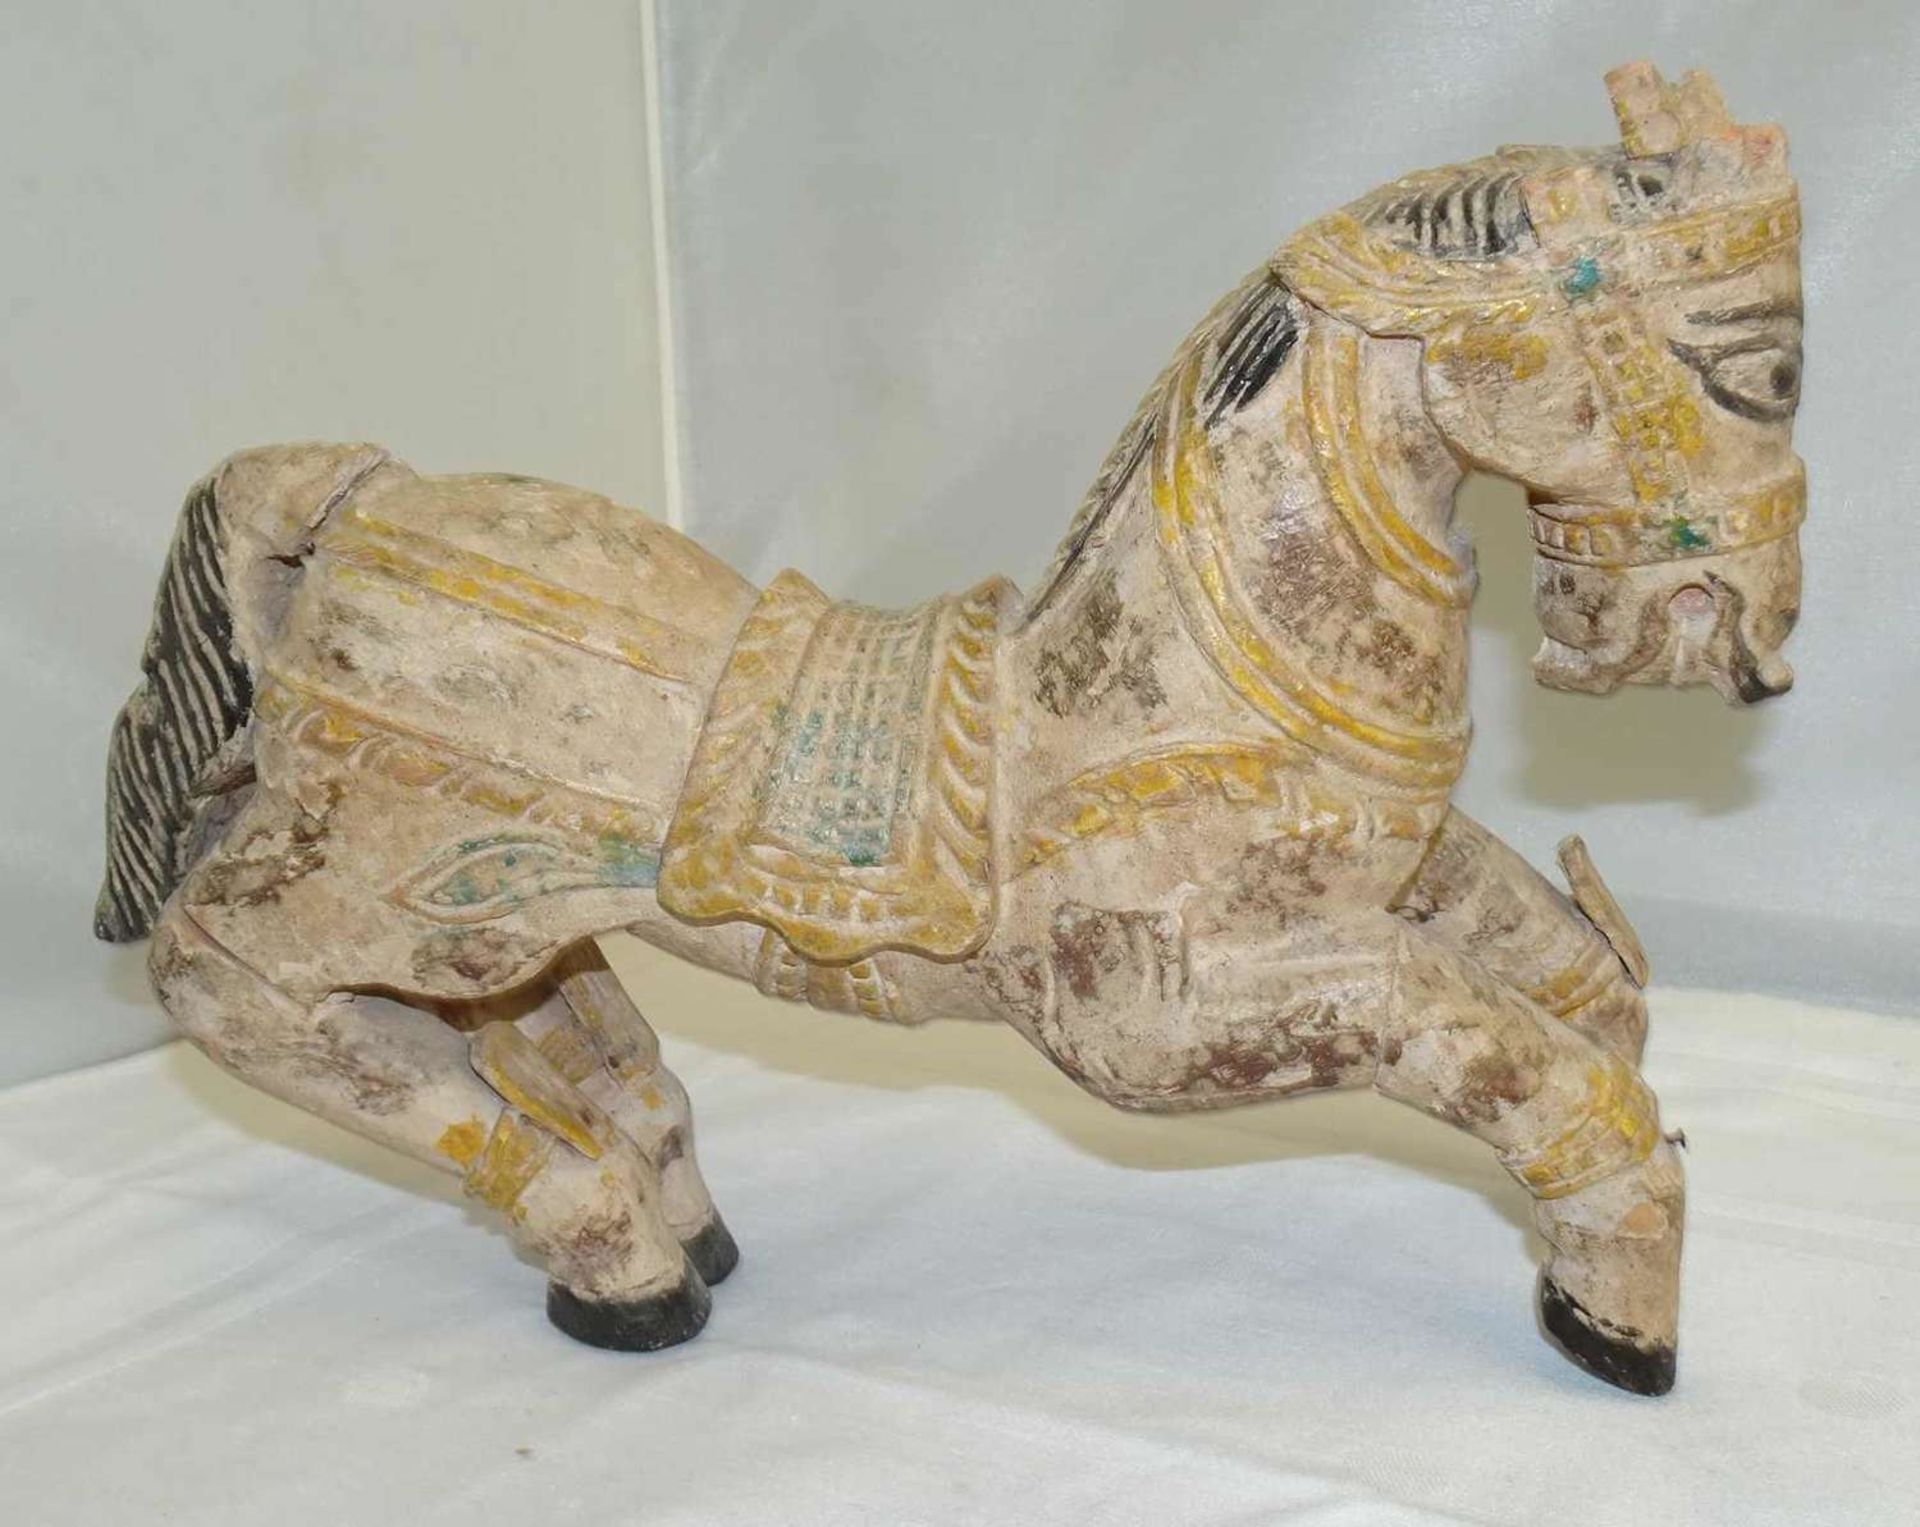 Pferd aus Asien, Handarbeit. Länge ca. 26 cm. Bitte besichtigen!Horse from Asia, handmade. Length